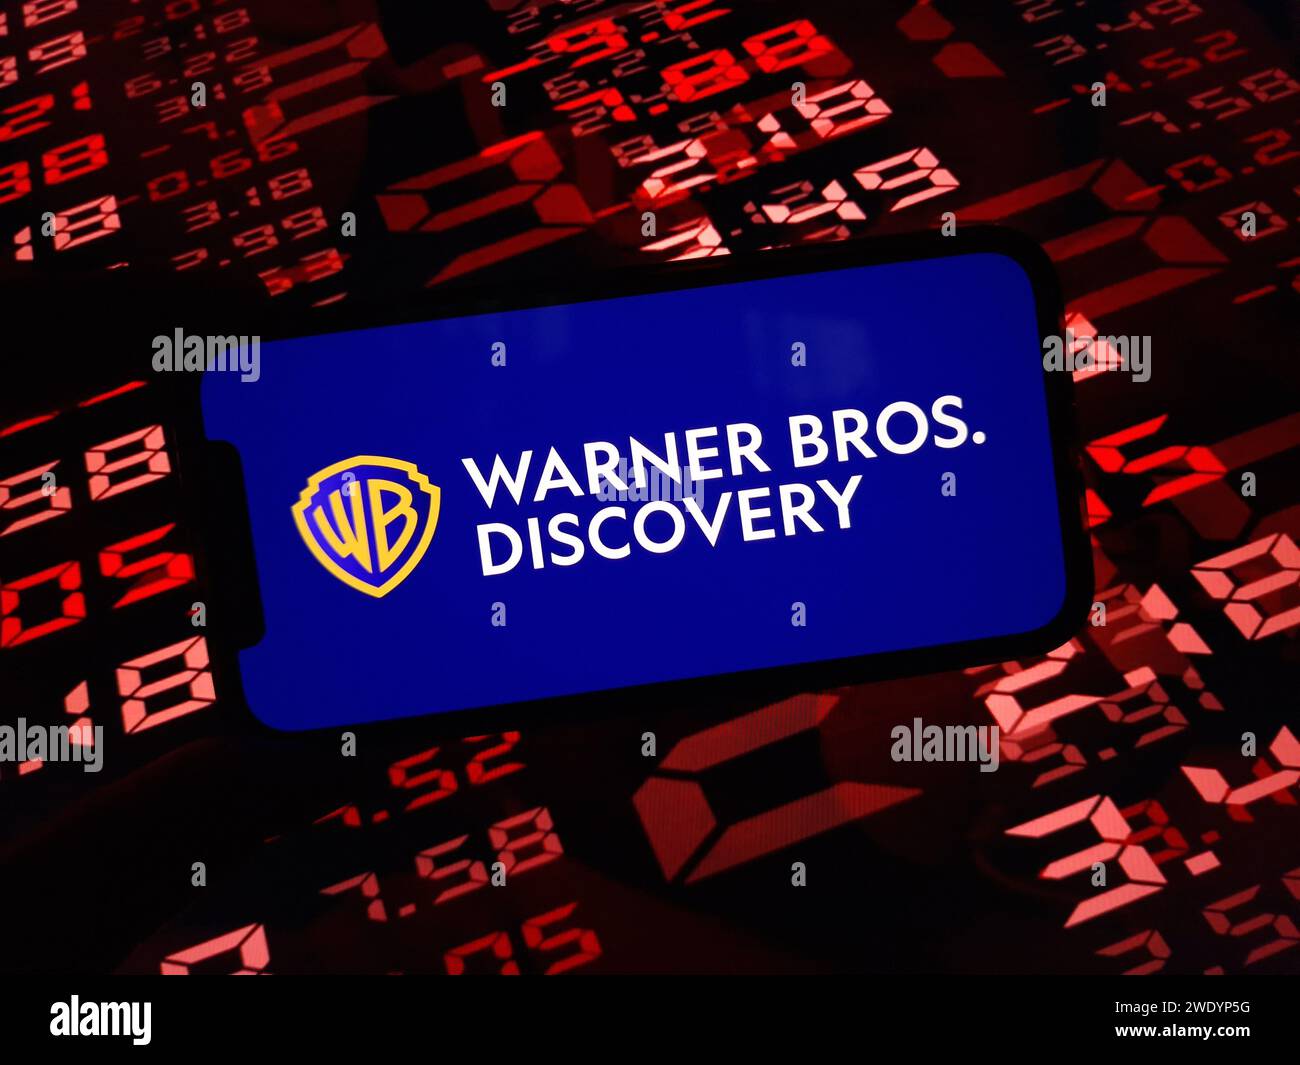 Konskie, Poland - January 22, 2024: Warner Bros Discovery company logo displayed on mobile phone screen Stock Photo